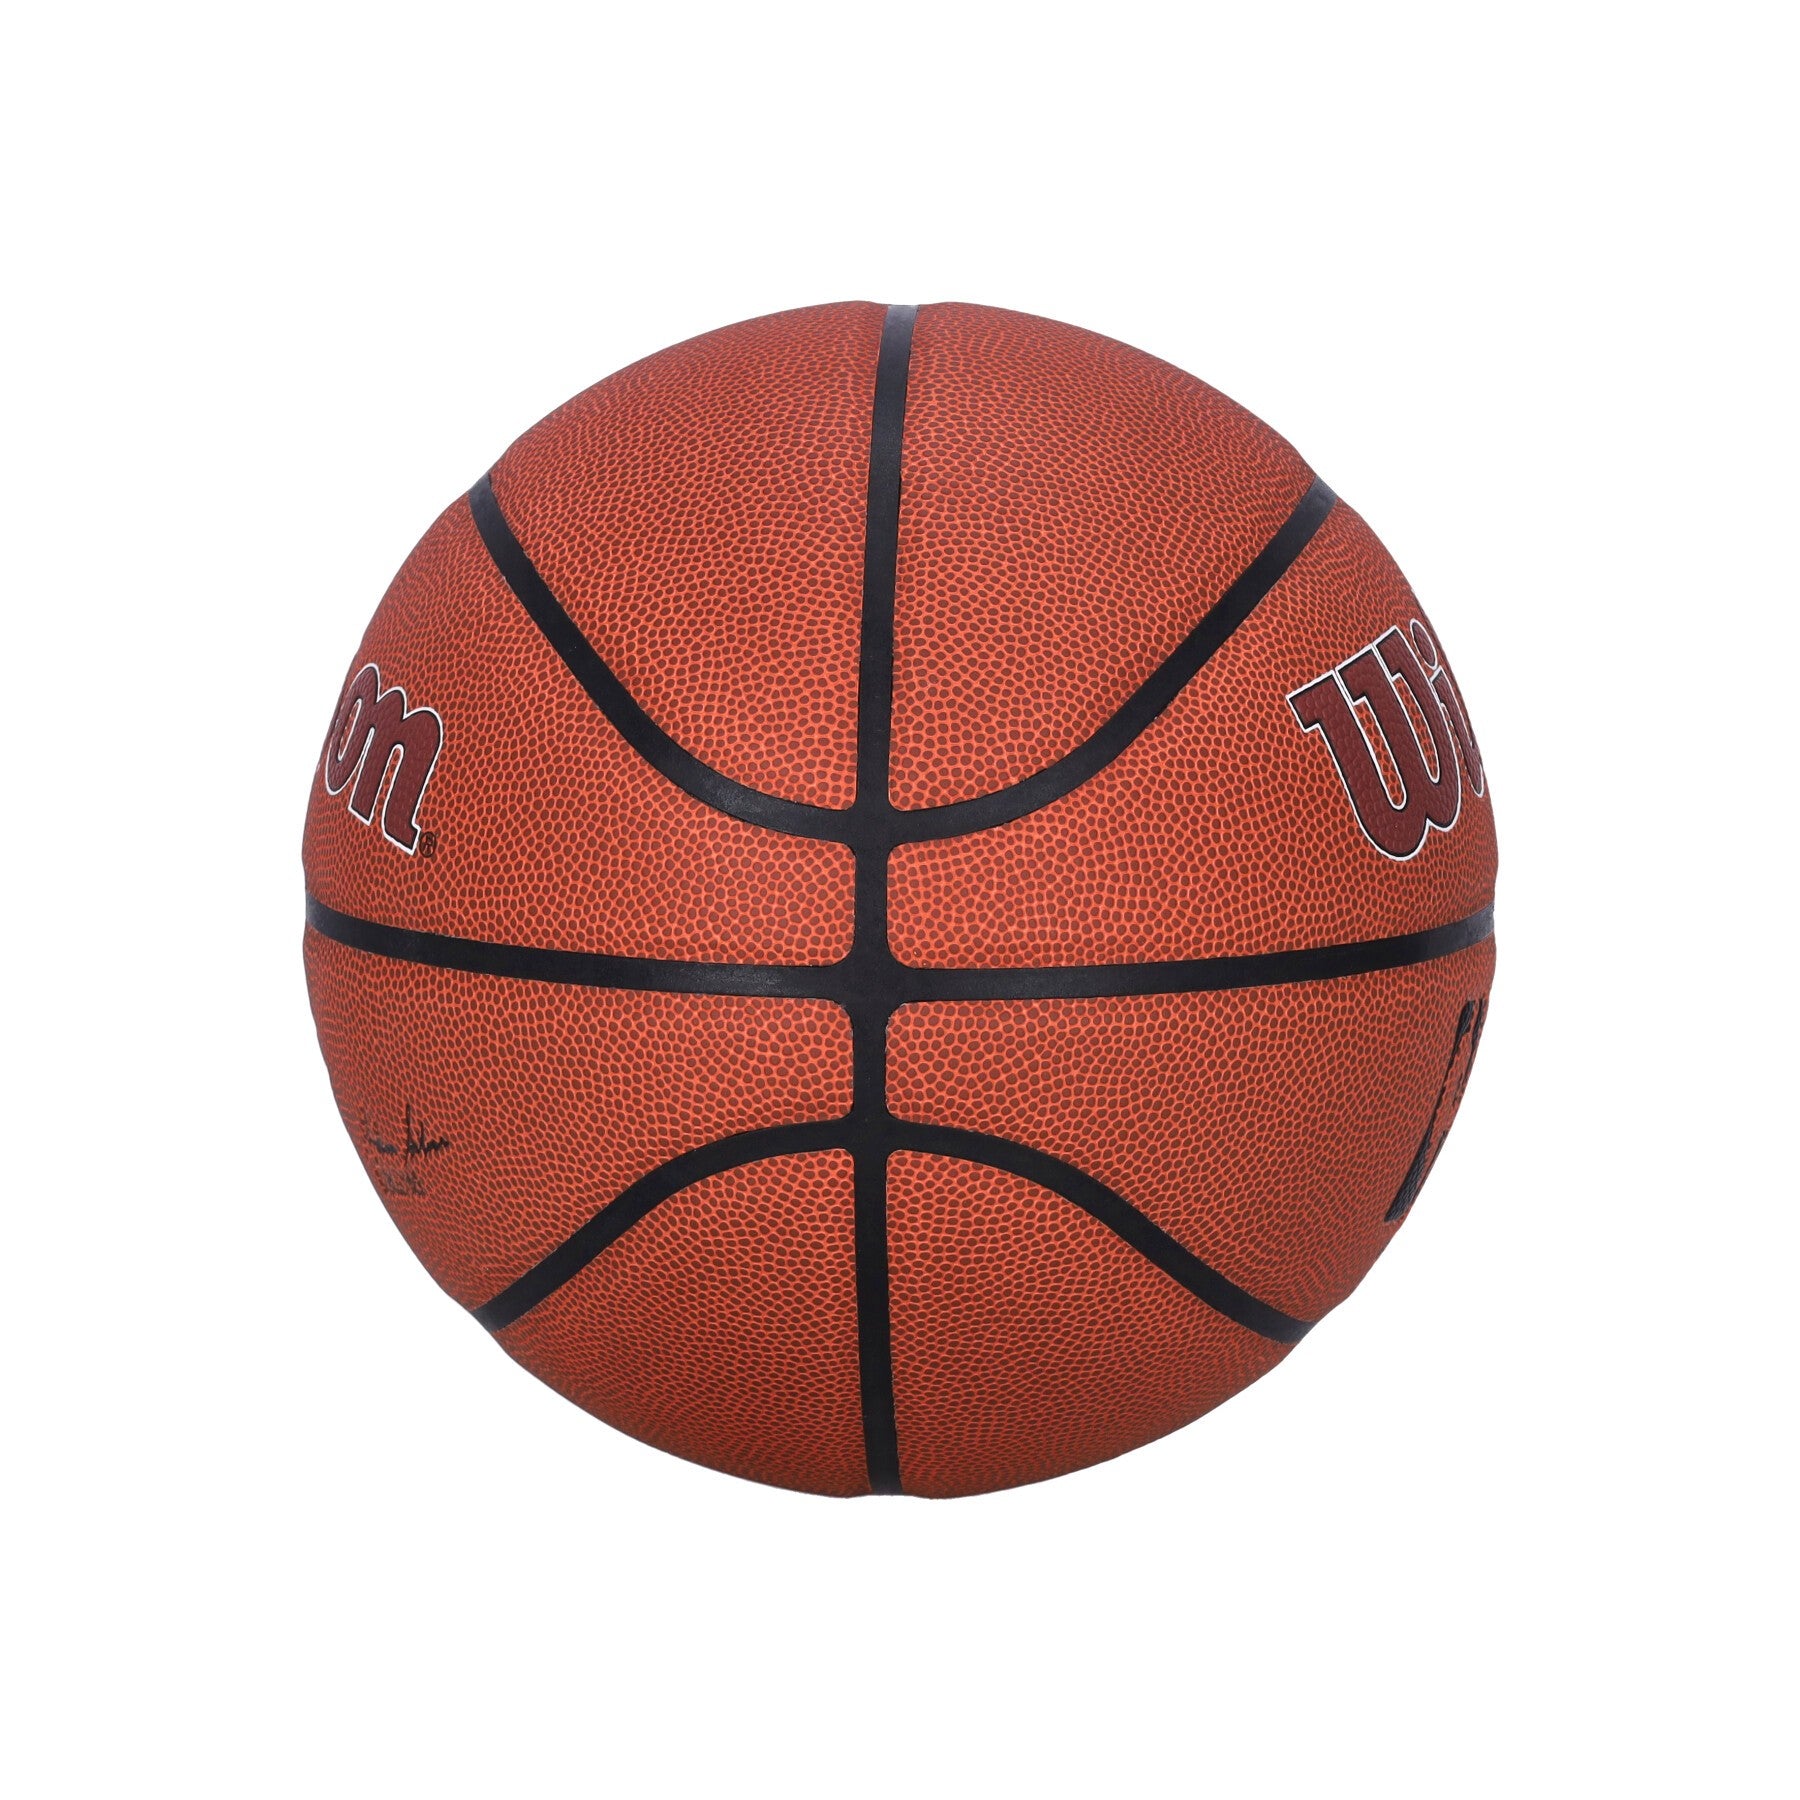 NBA Team Alliance Basketball Men's Ball Size 7 Clecav